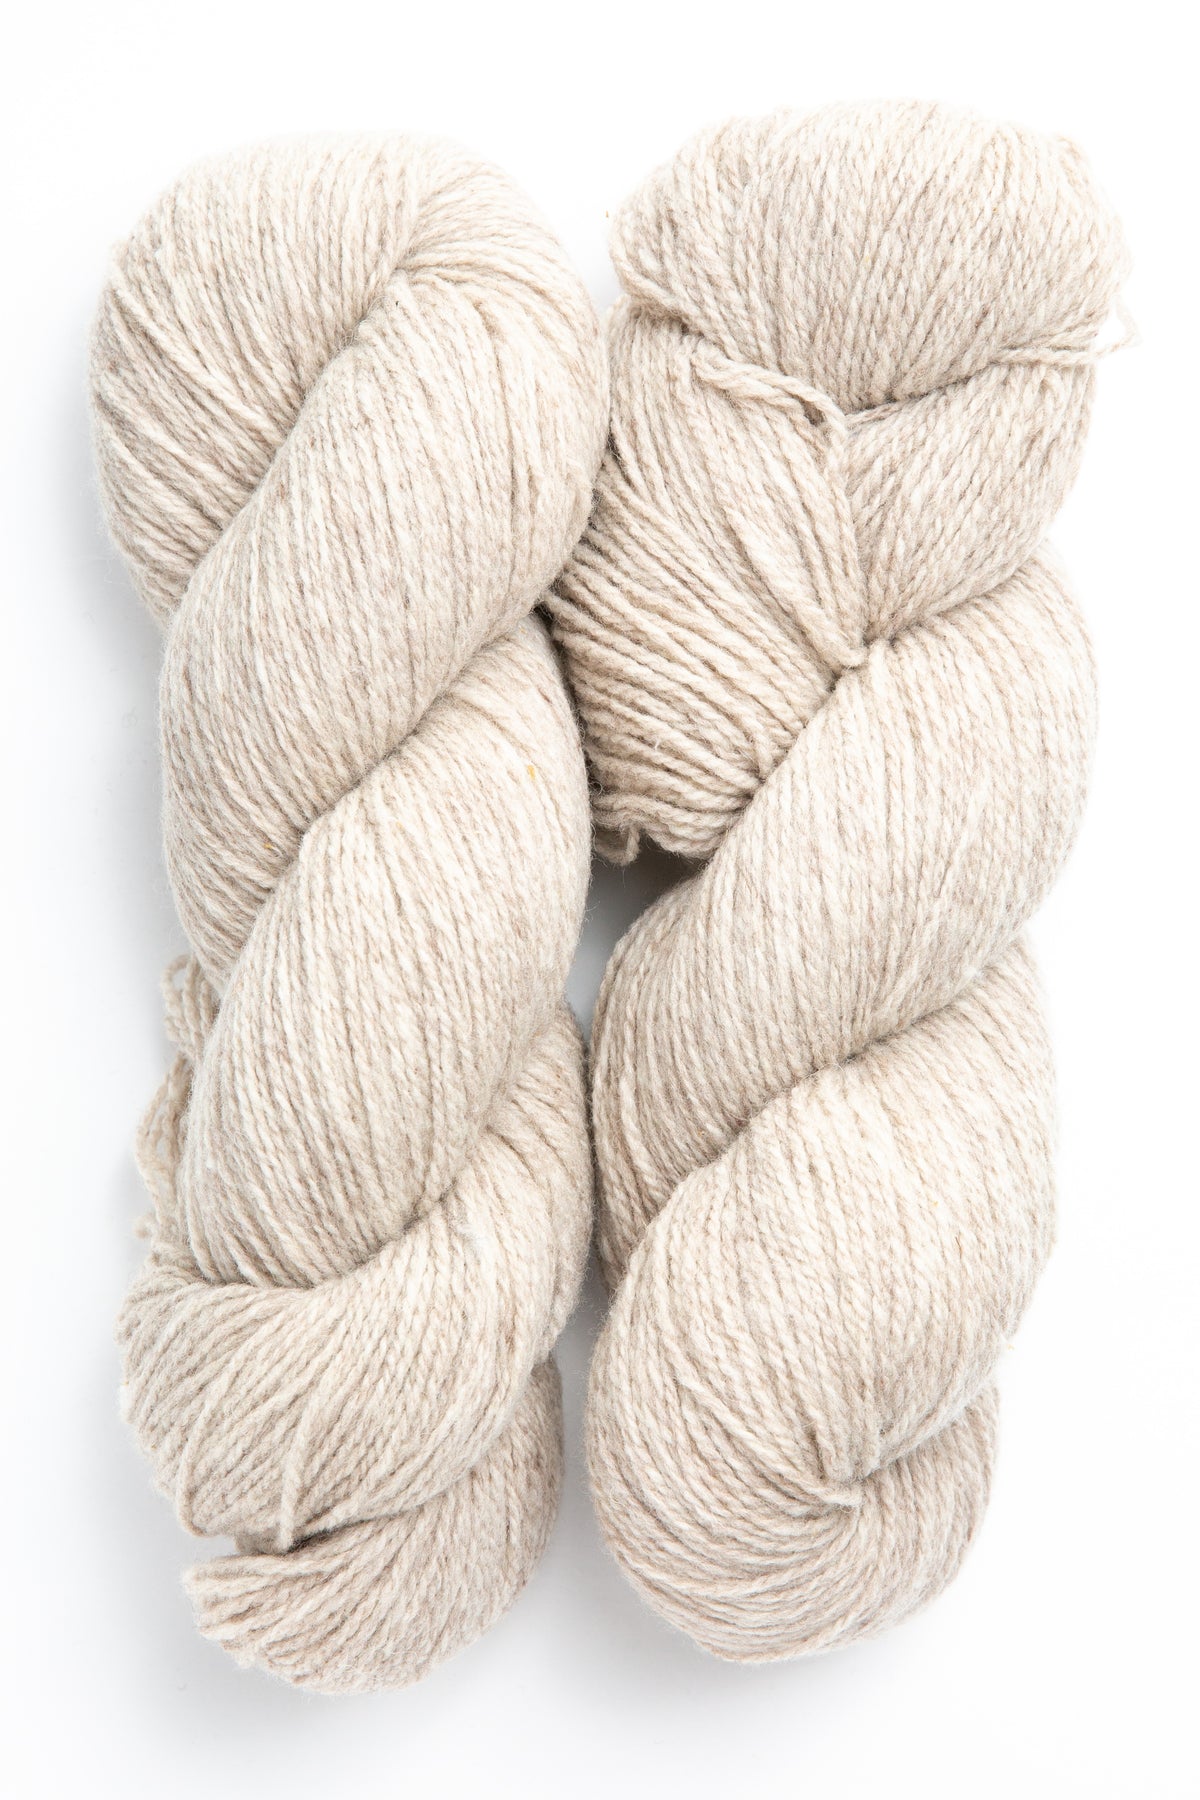 Stitching Thread ~ Planet Earth 100% Merino Wool CLOUD #097 White